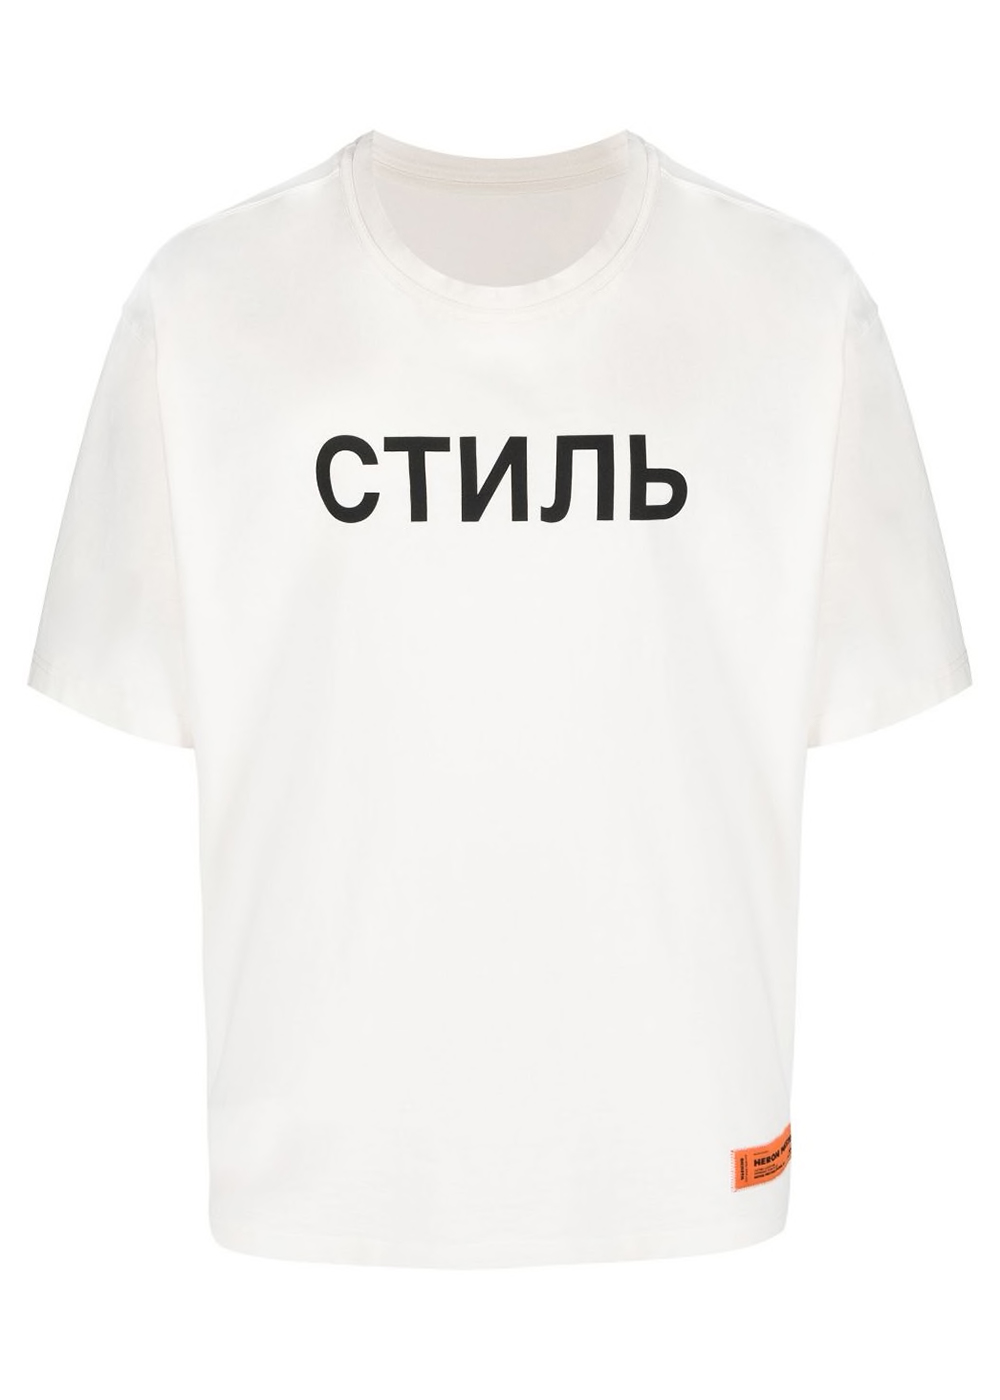 Heron Preston CTNMB Logo T-Shirt White/Black Men's - SS22 - US